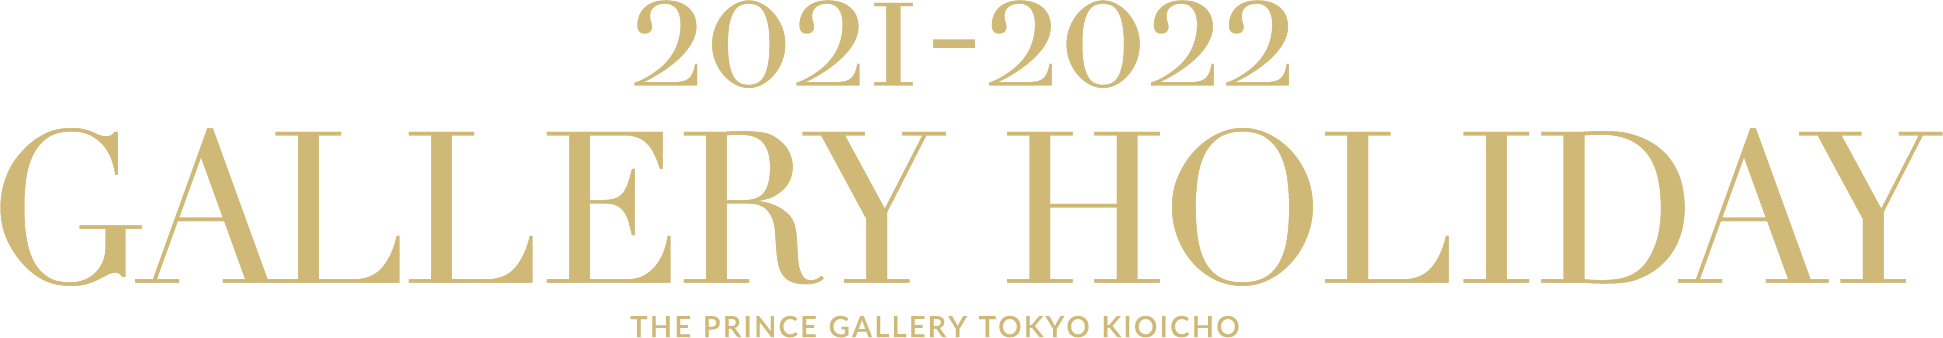 2021-2022 GALLERY HOLIDAY THE PRINCE GALLERY TOKYO KIOICHO